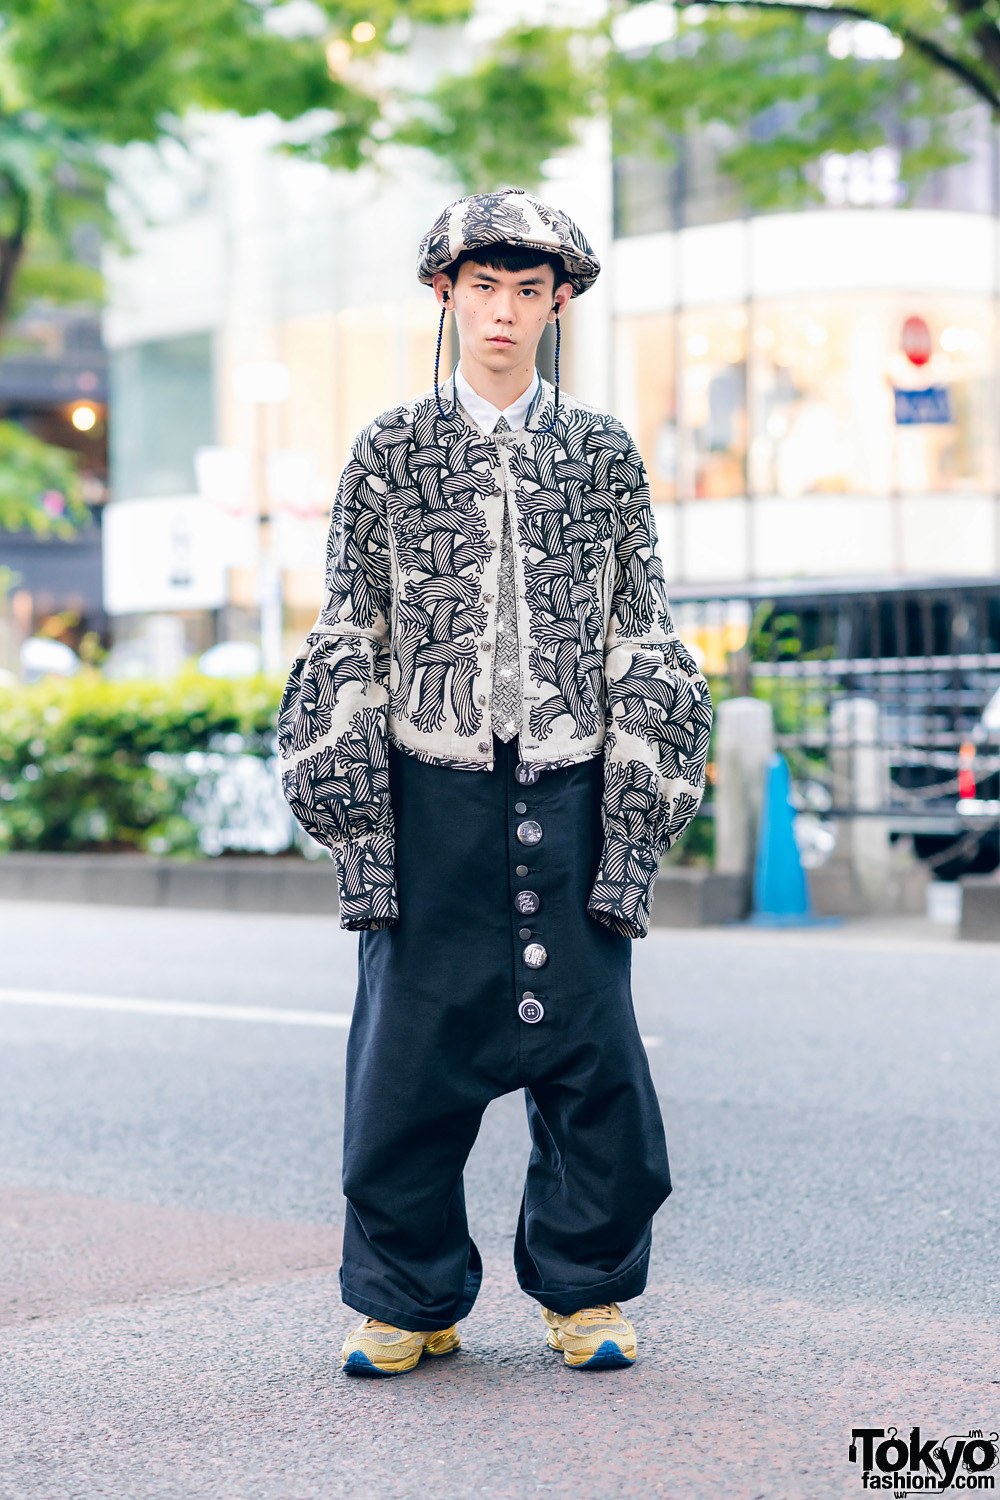 Christopher Nemeth Rope Print Harajuku Street Style w/ Newsboy Cap, Collarless Jacket, Sarueru Overalls & Adidas x Raf Simons Sneakers